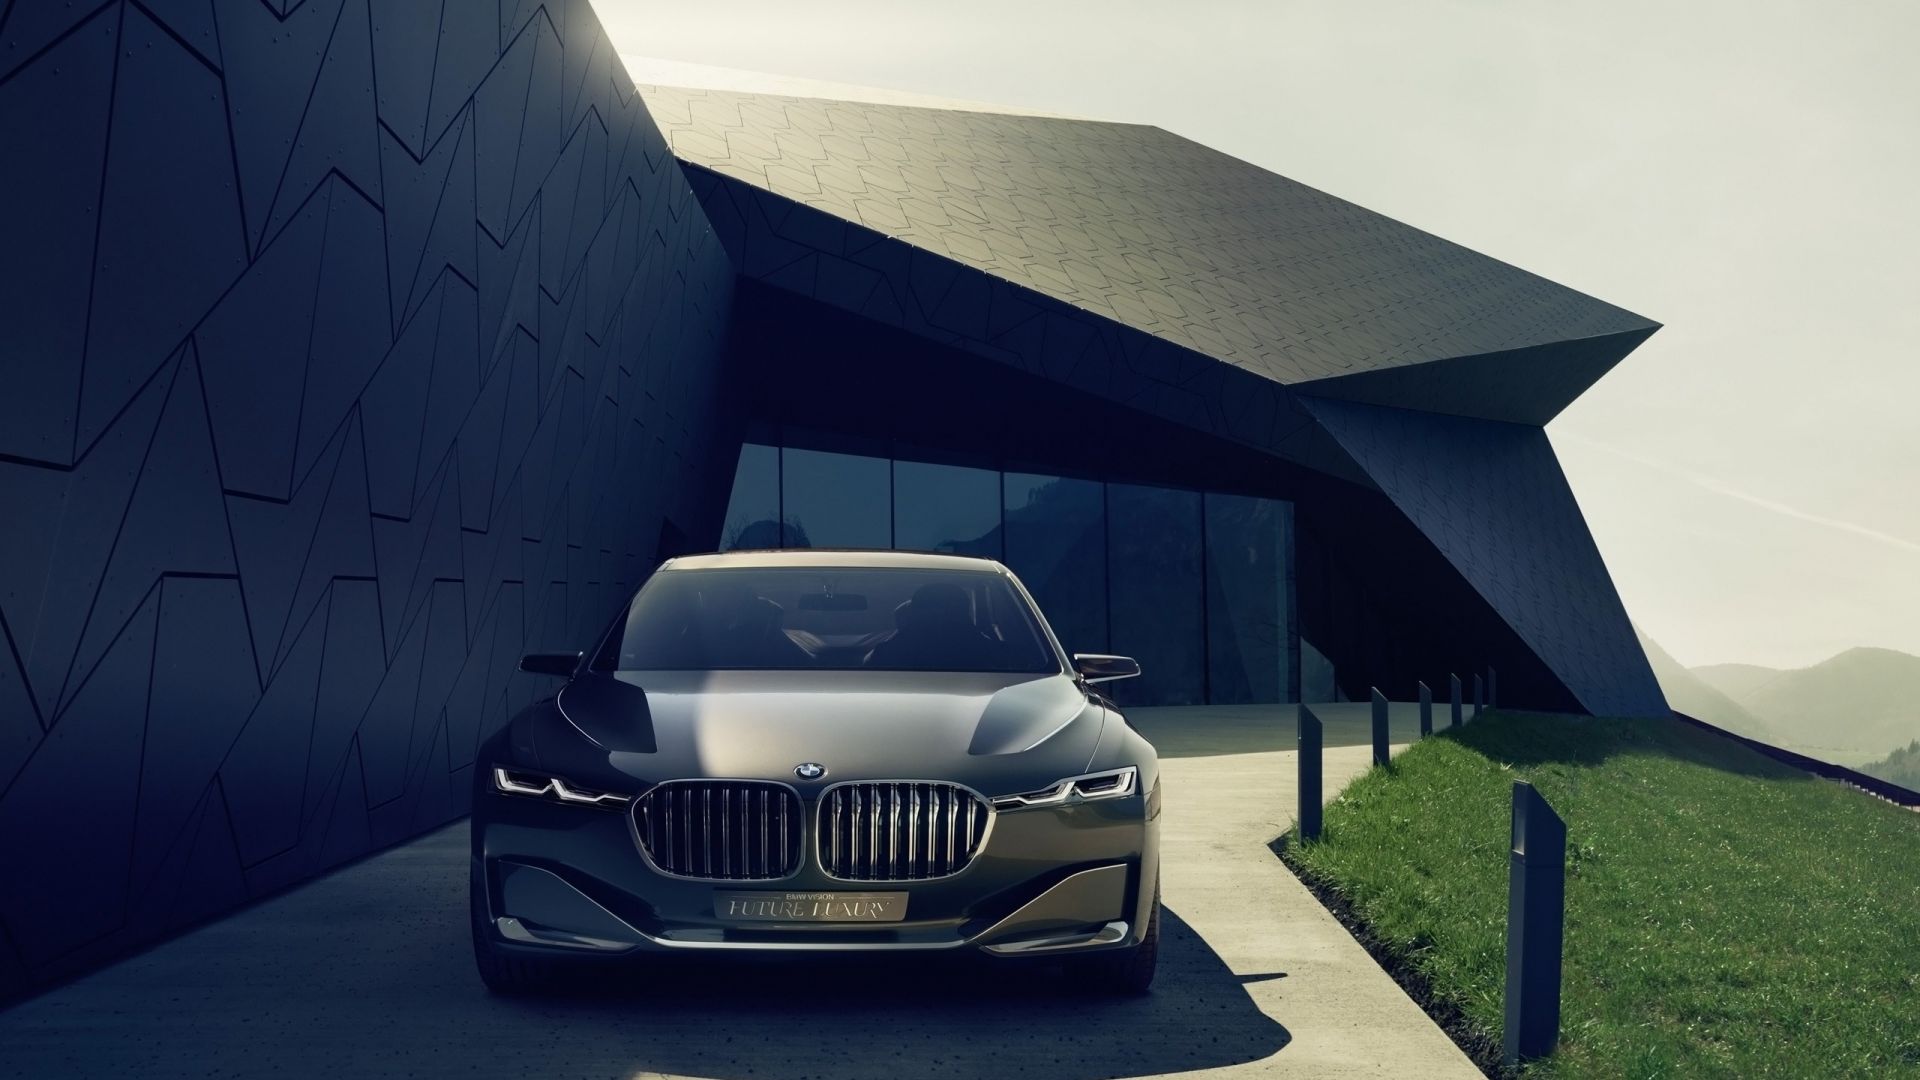 Wallpaper BMW vision future luxury car